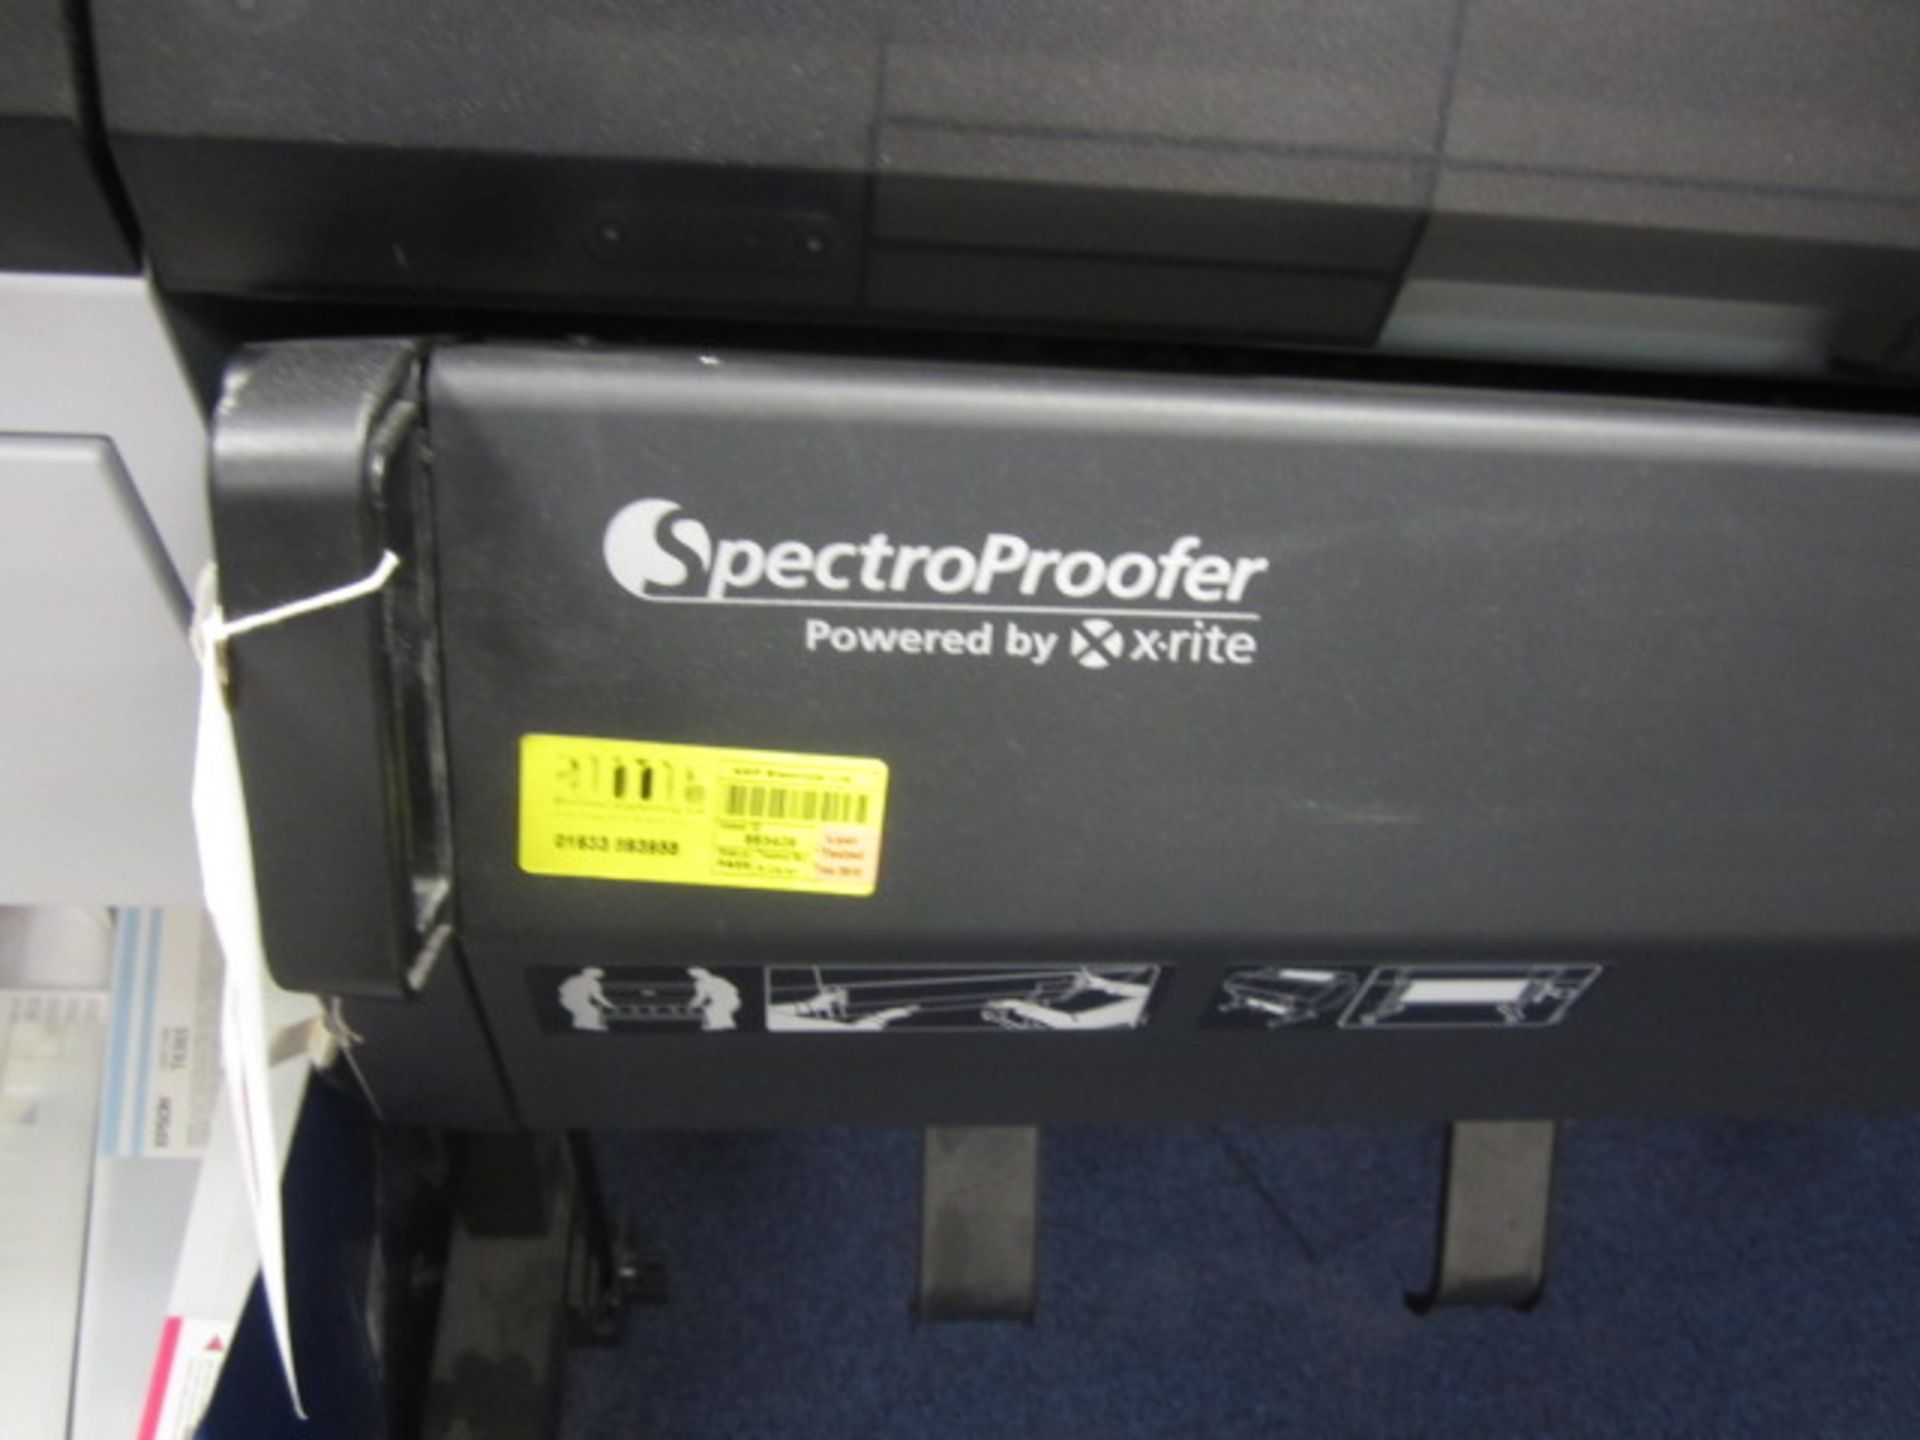 Epson Stylus Pro 9890 plotter spectroproofer, model K162A, serial no. N7JE006746 (2013) - Image 4 of 6